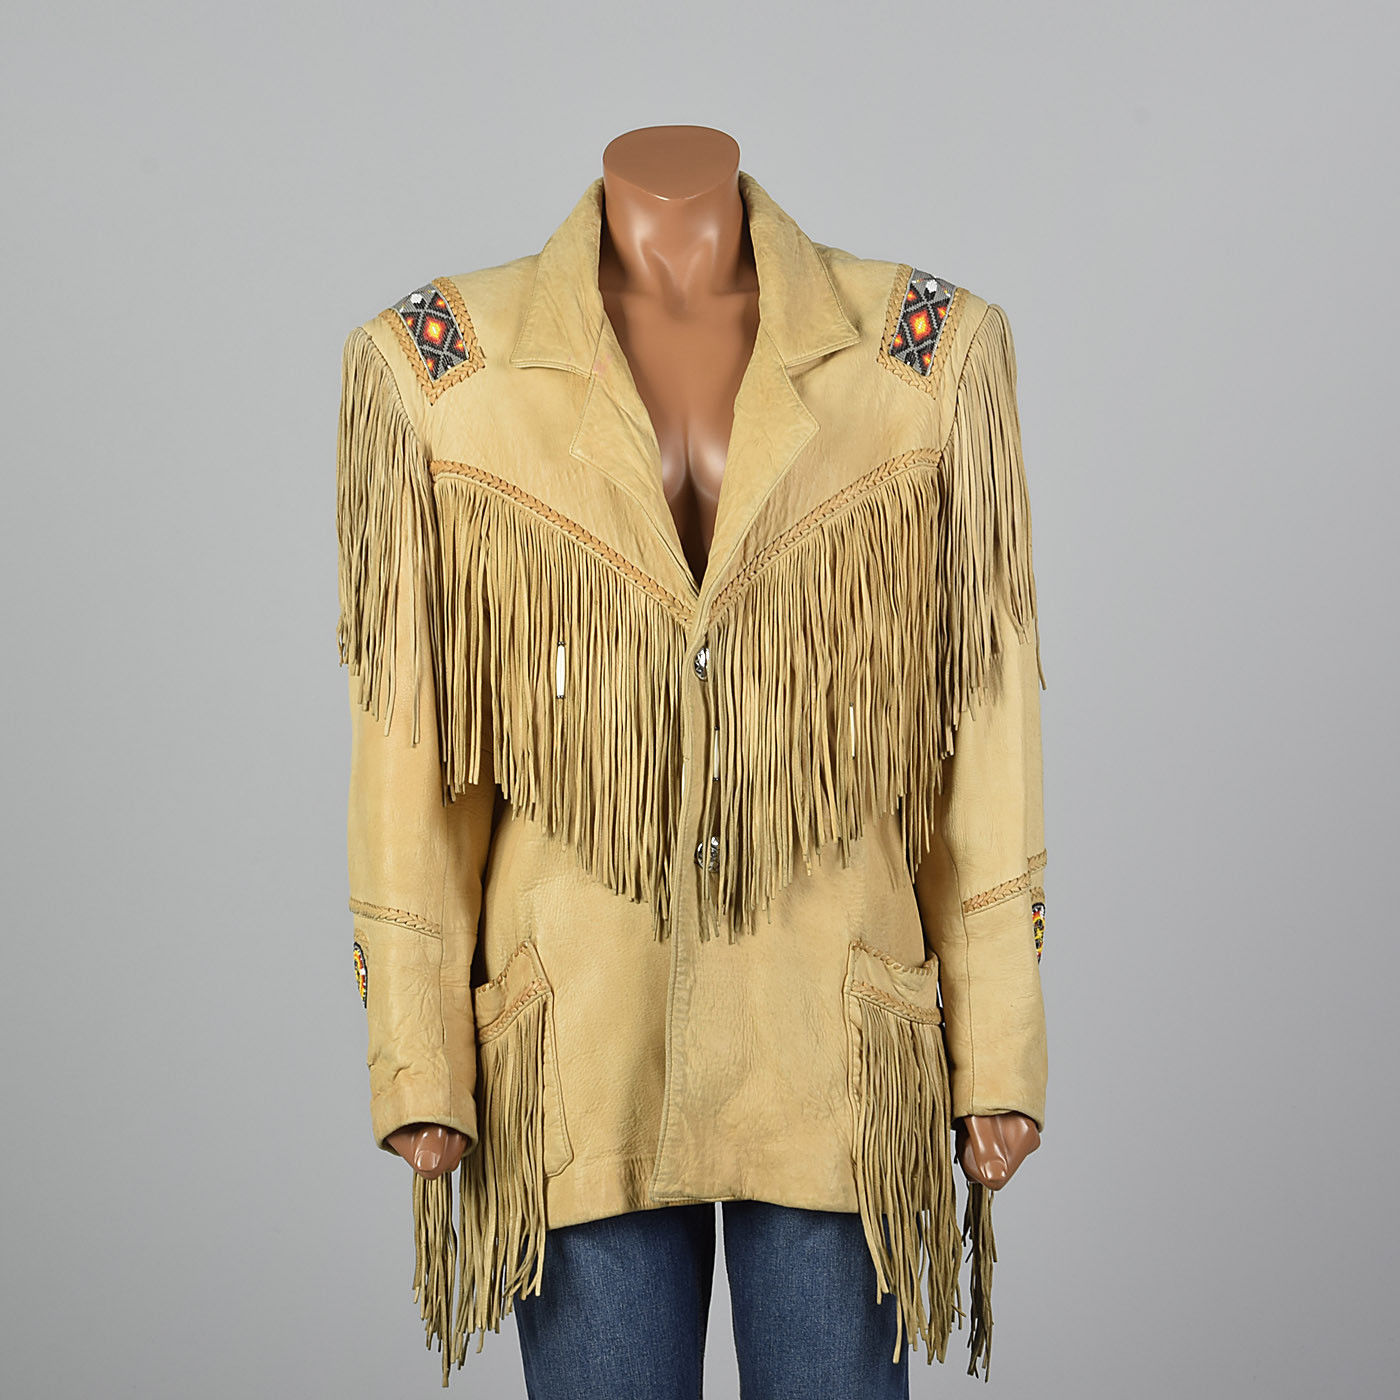 Ladies Jacket Western Suede Leather Cow-Lady Native American Women Fringe coats 